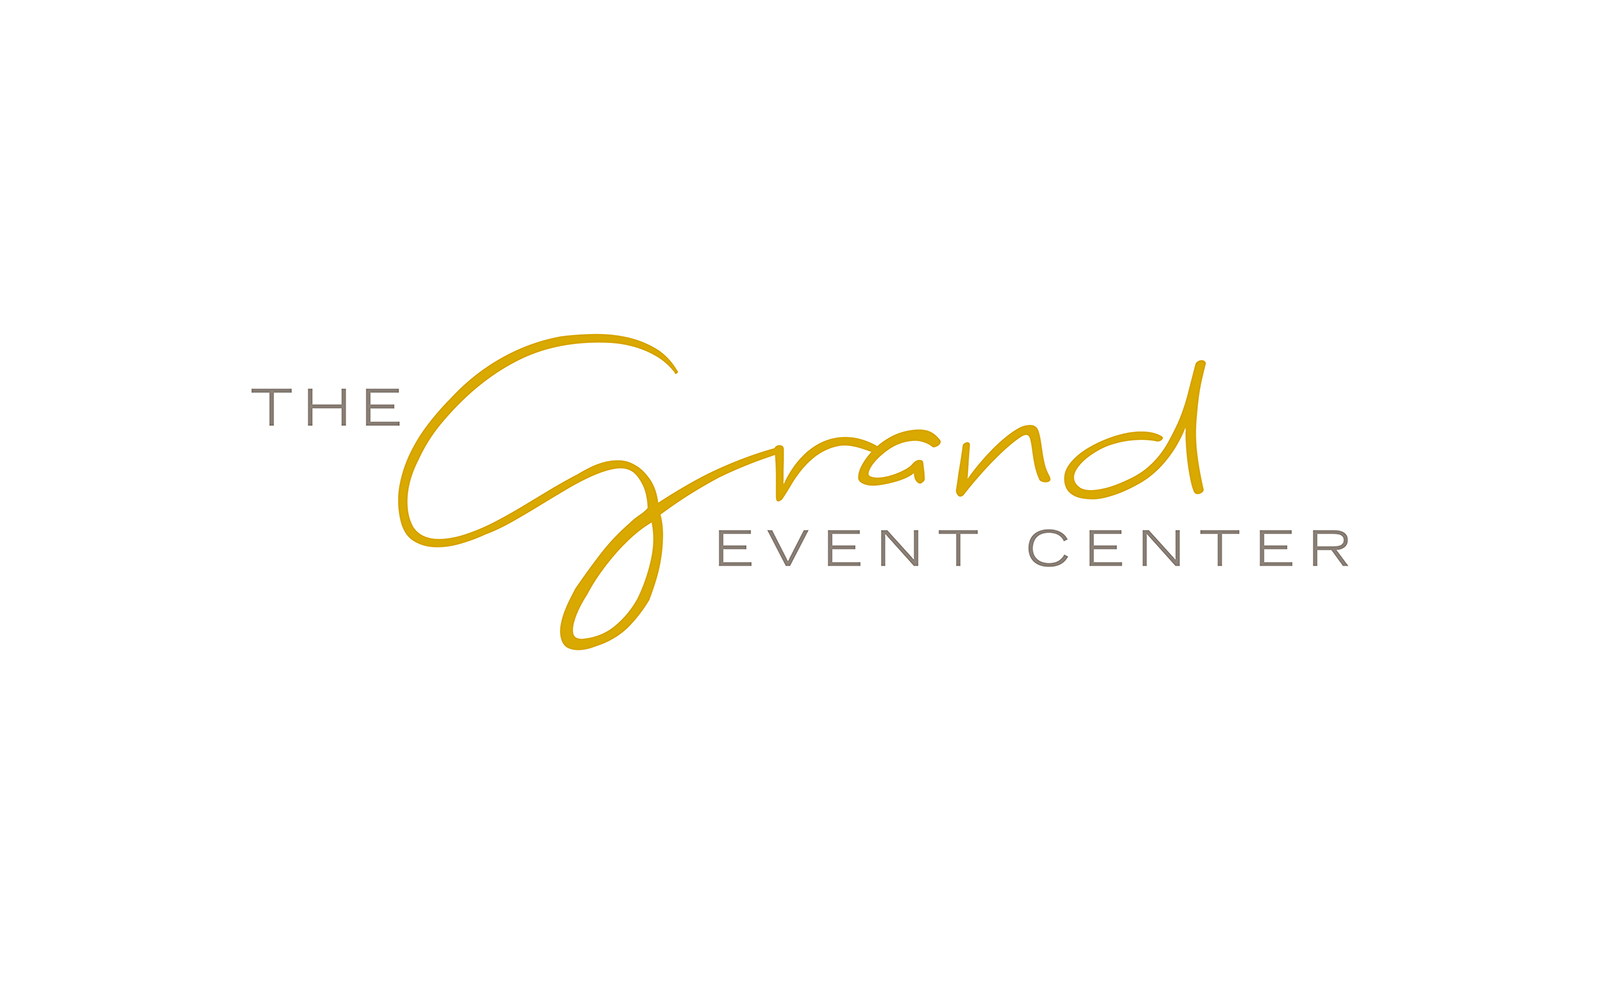 Grand Event Center Identity